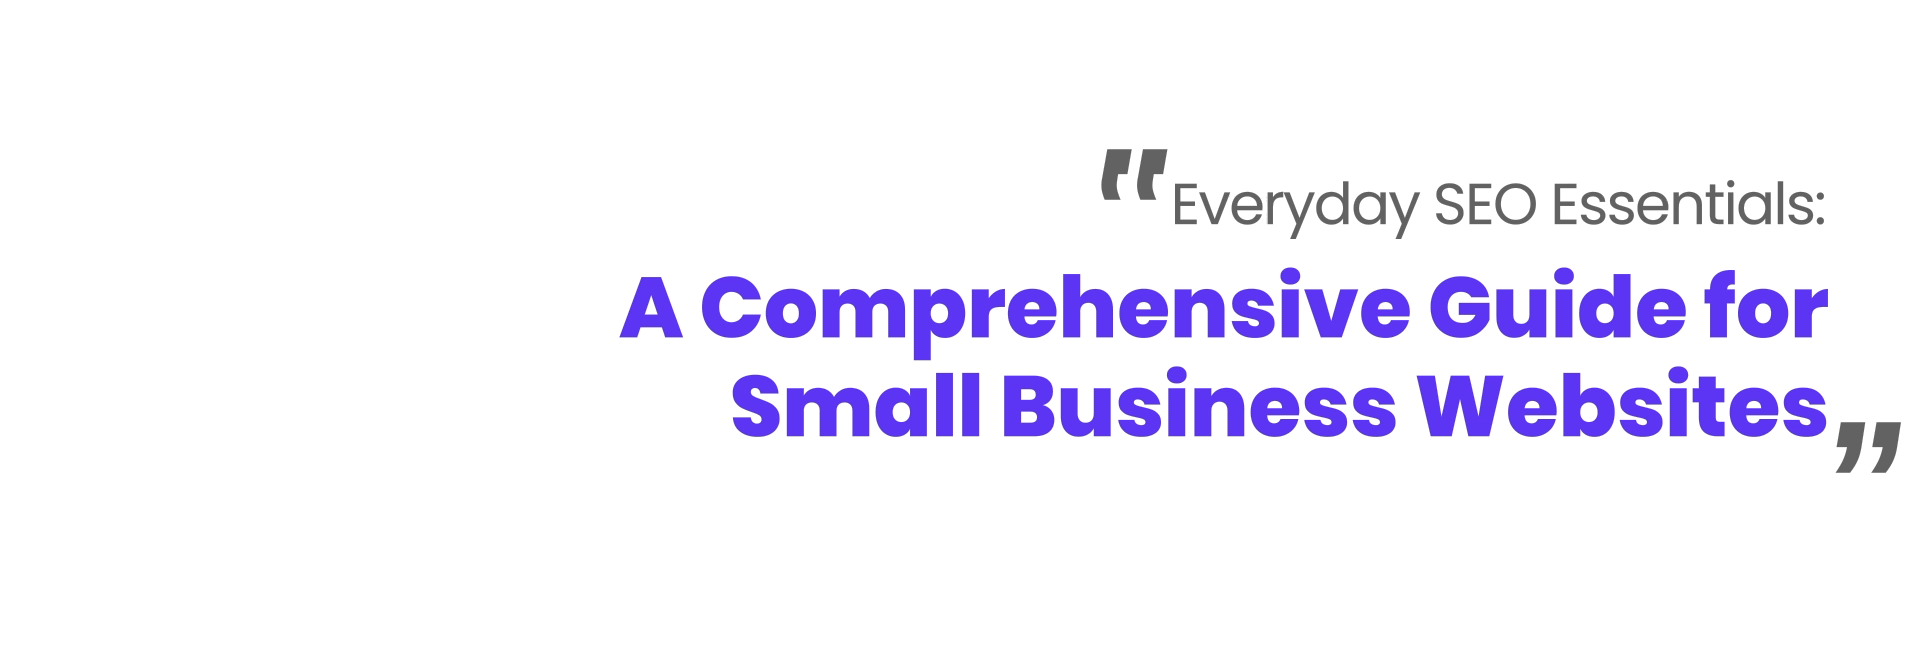 Everyday SEO Essentials: A Comprehensive Guide for Small Business Websites